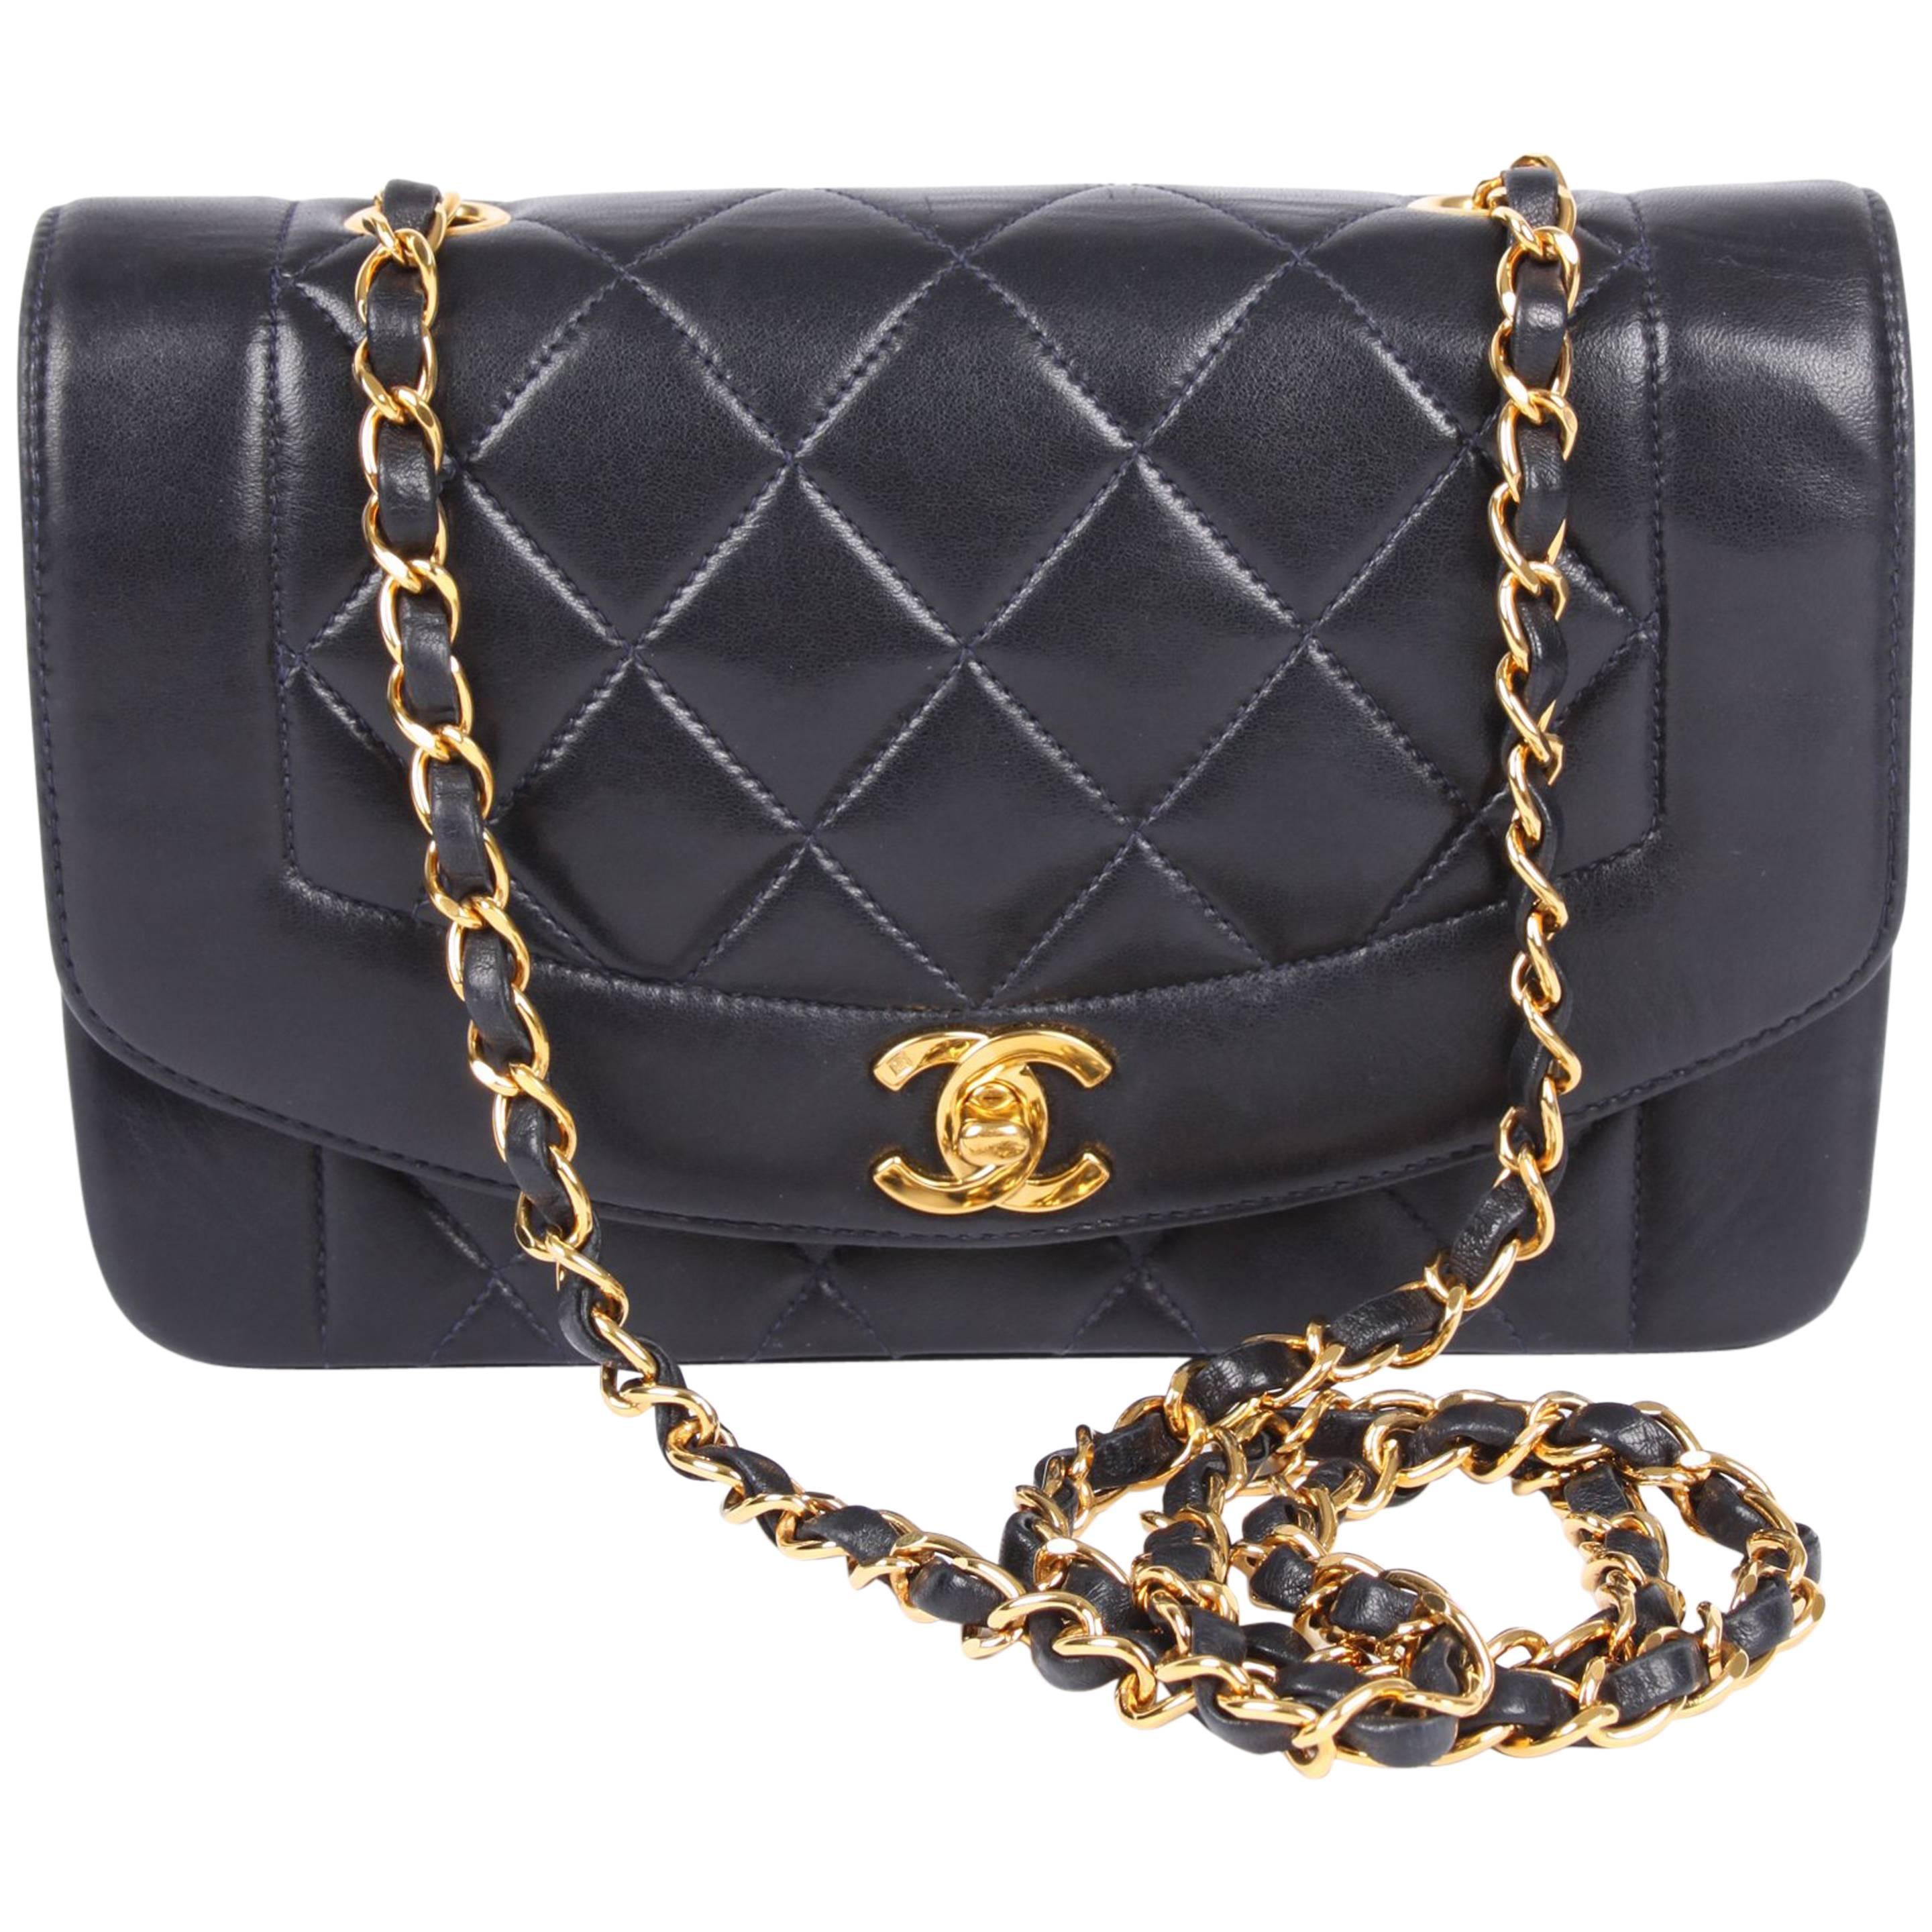 Chanel Vintage Diana Single Flap Bag - dark blue leather 1995